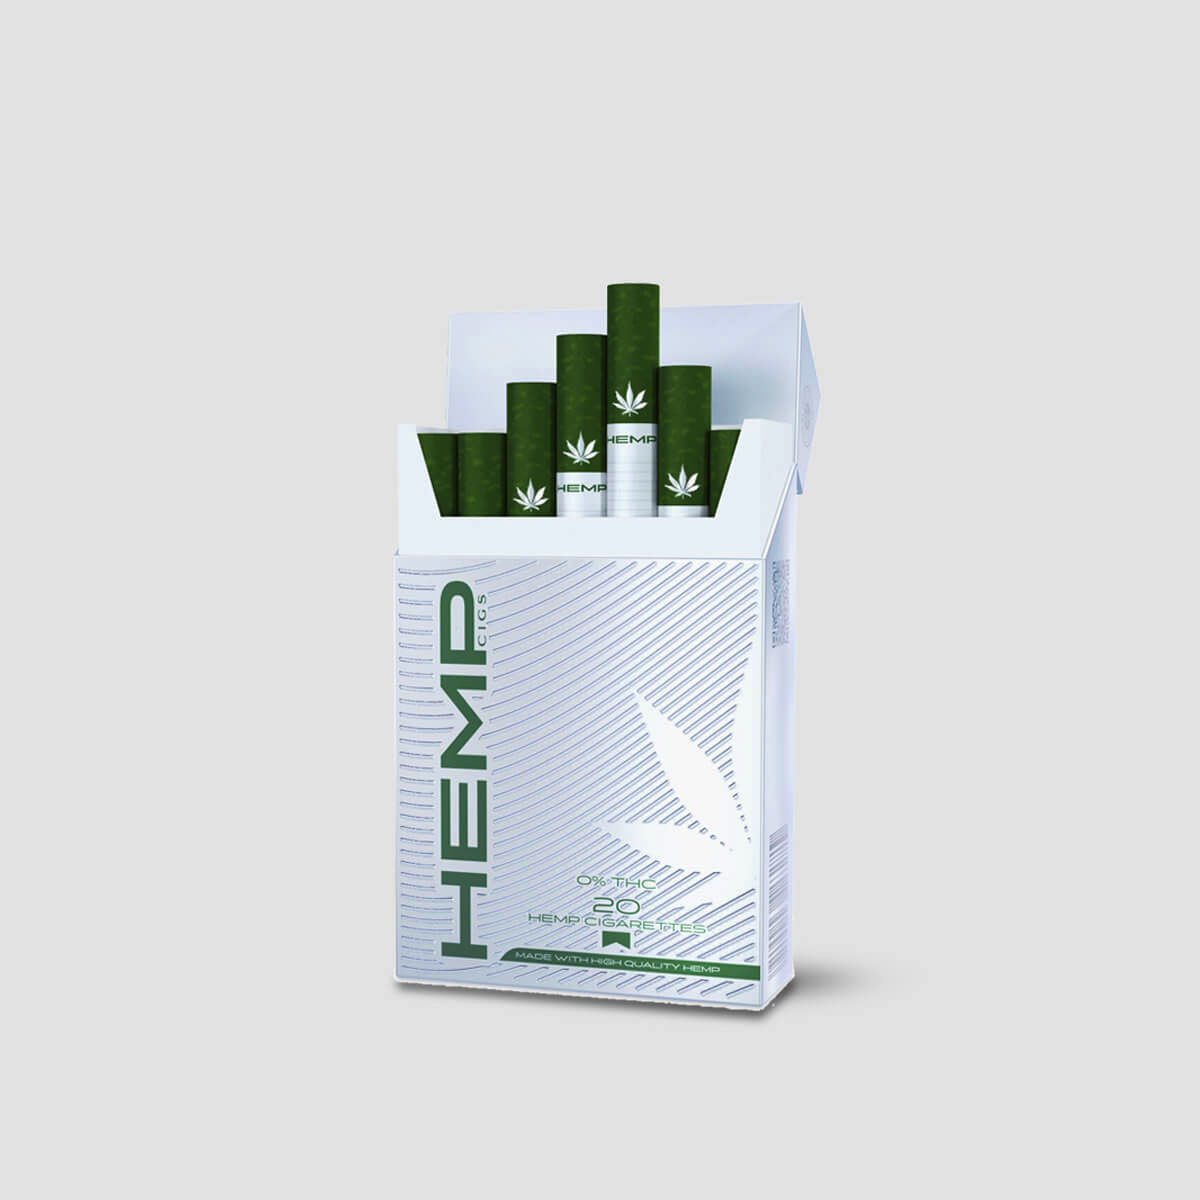 Rolled-Cigarettes-E-Cigs-Boxes